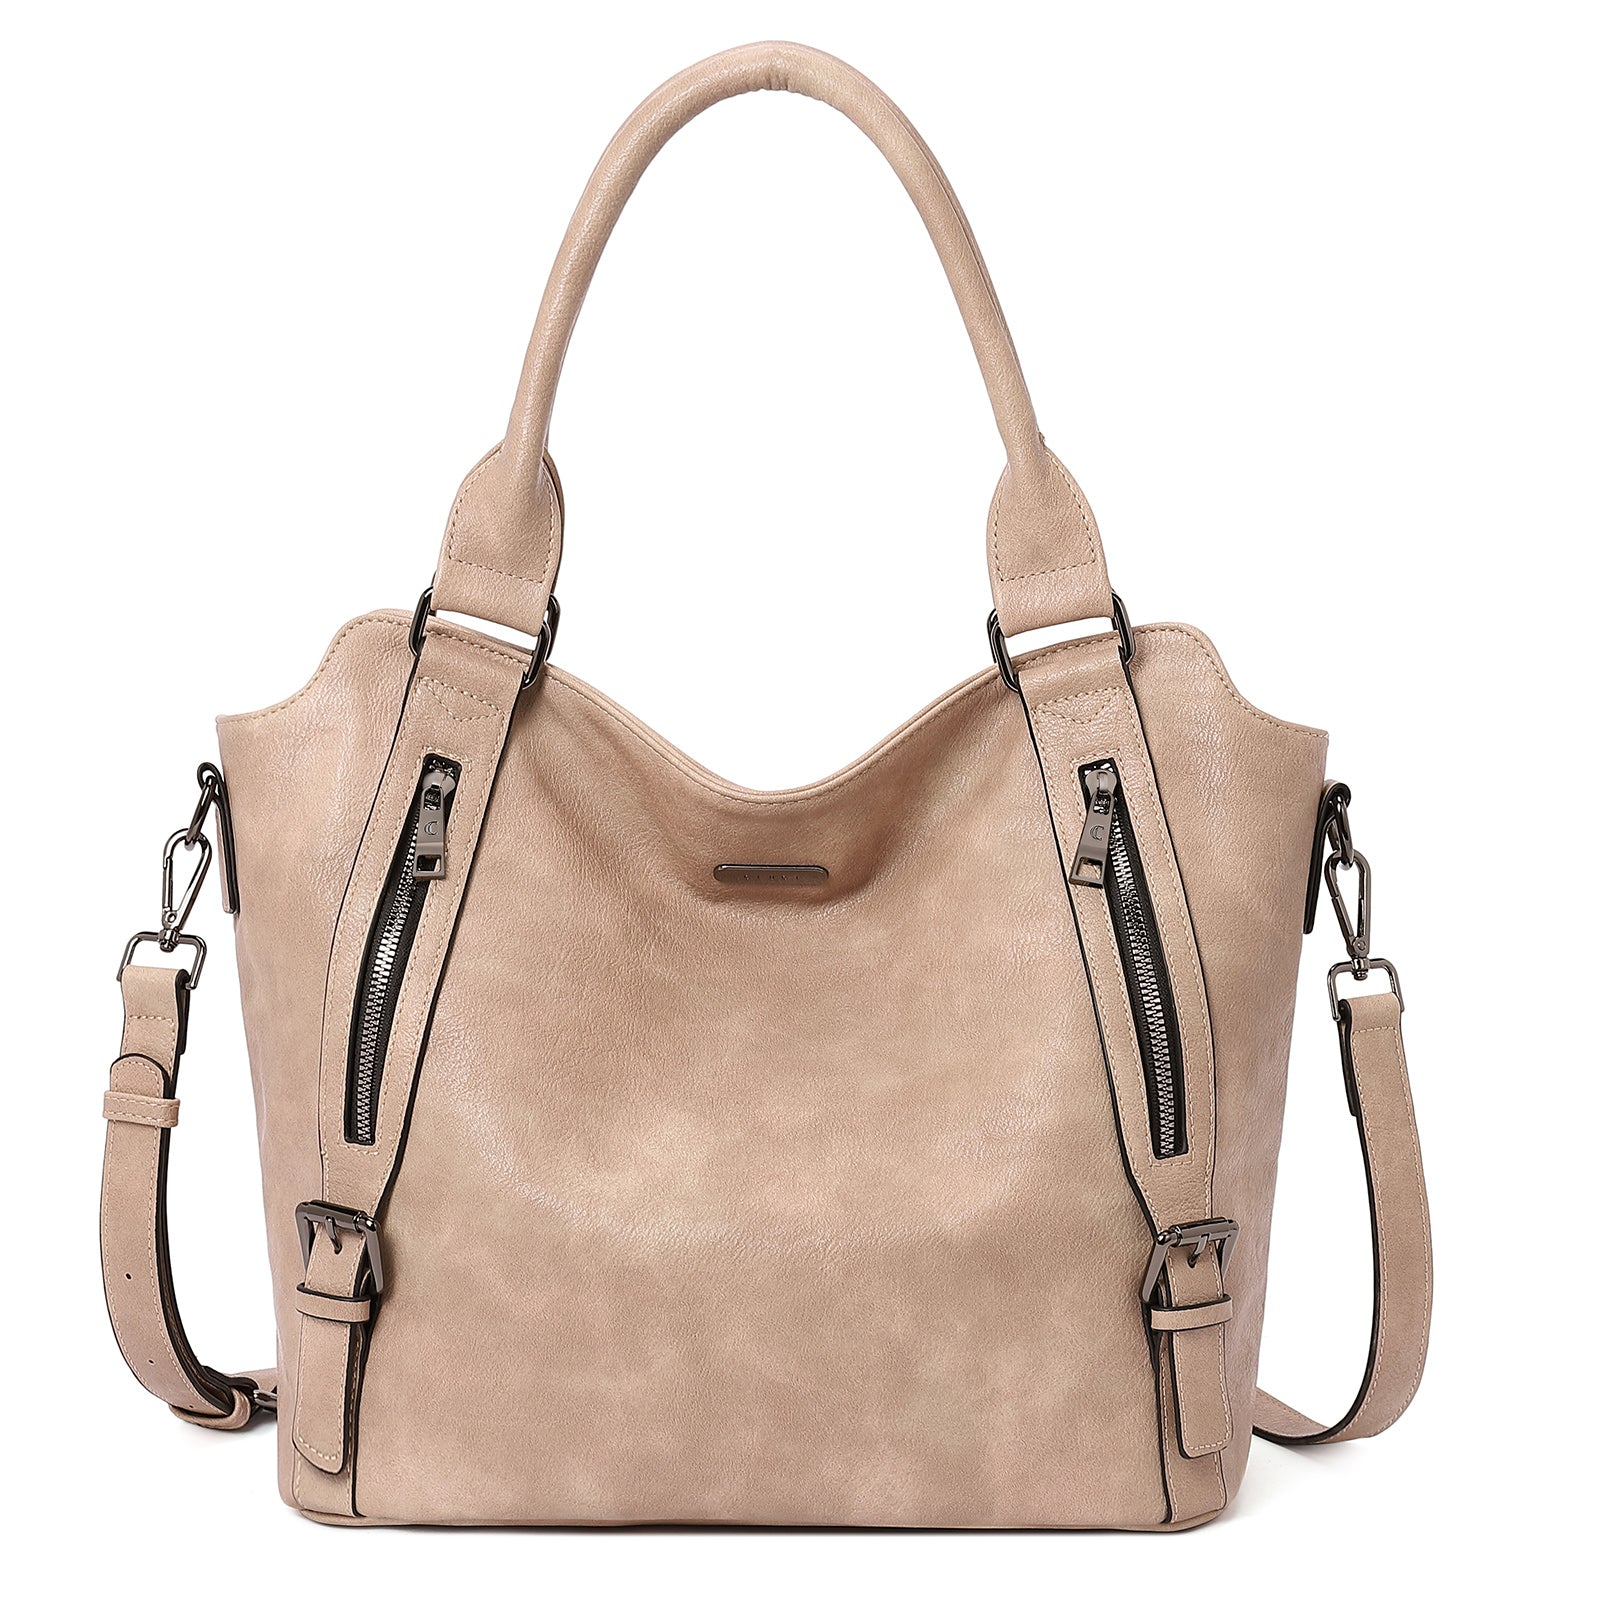 CLUCI Purses and Handbags for Women Vegan Leather Hobo Bags Large Ladies Tote Crossbody Shoulder Bag